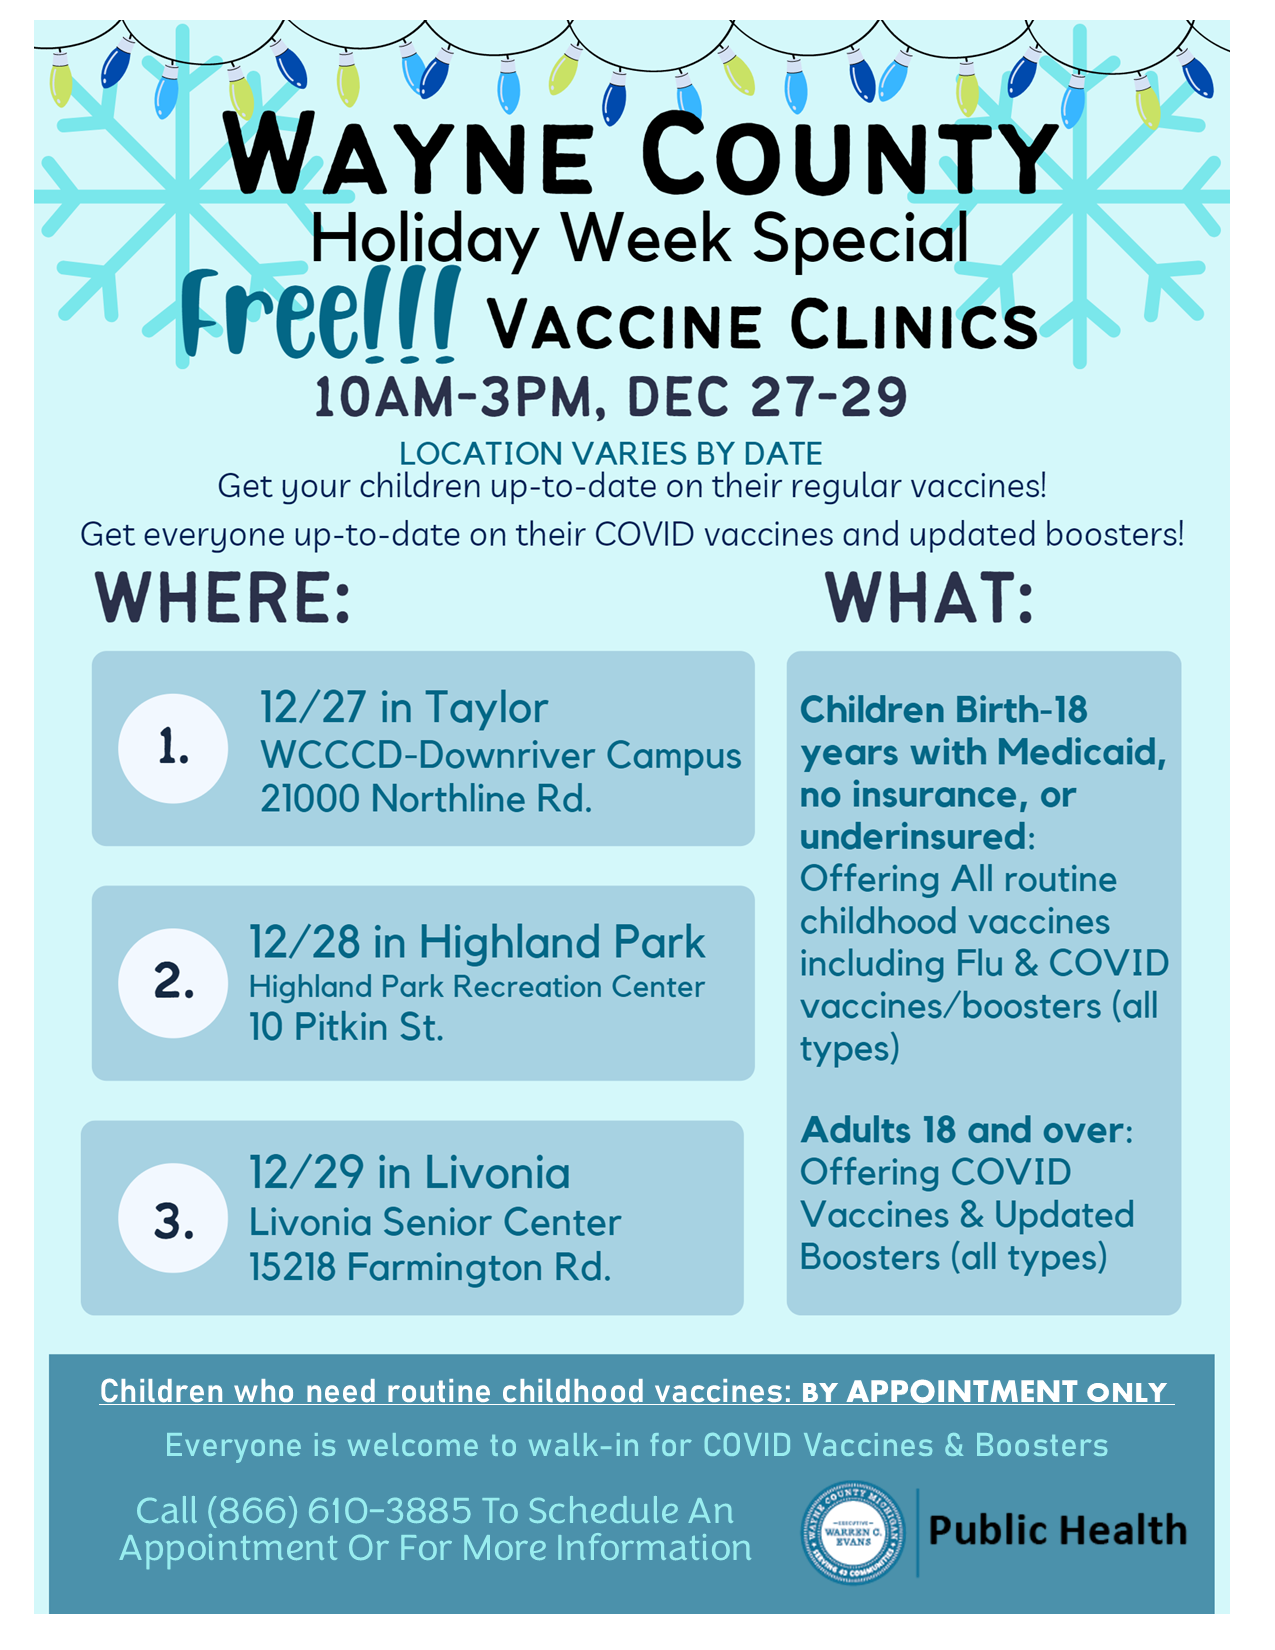 Flier for Wayne County free vaccine clinics